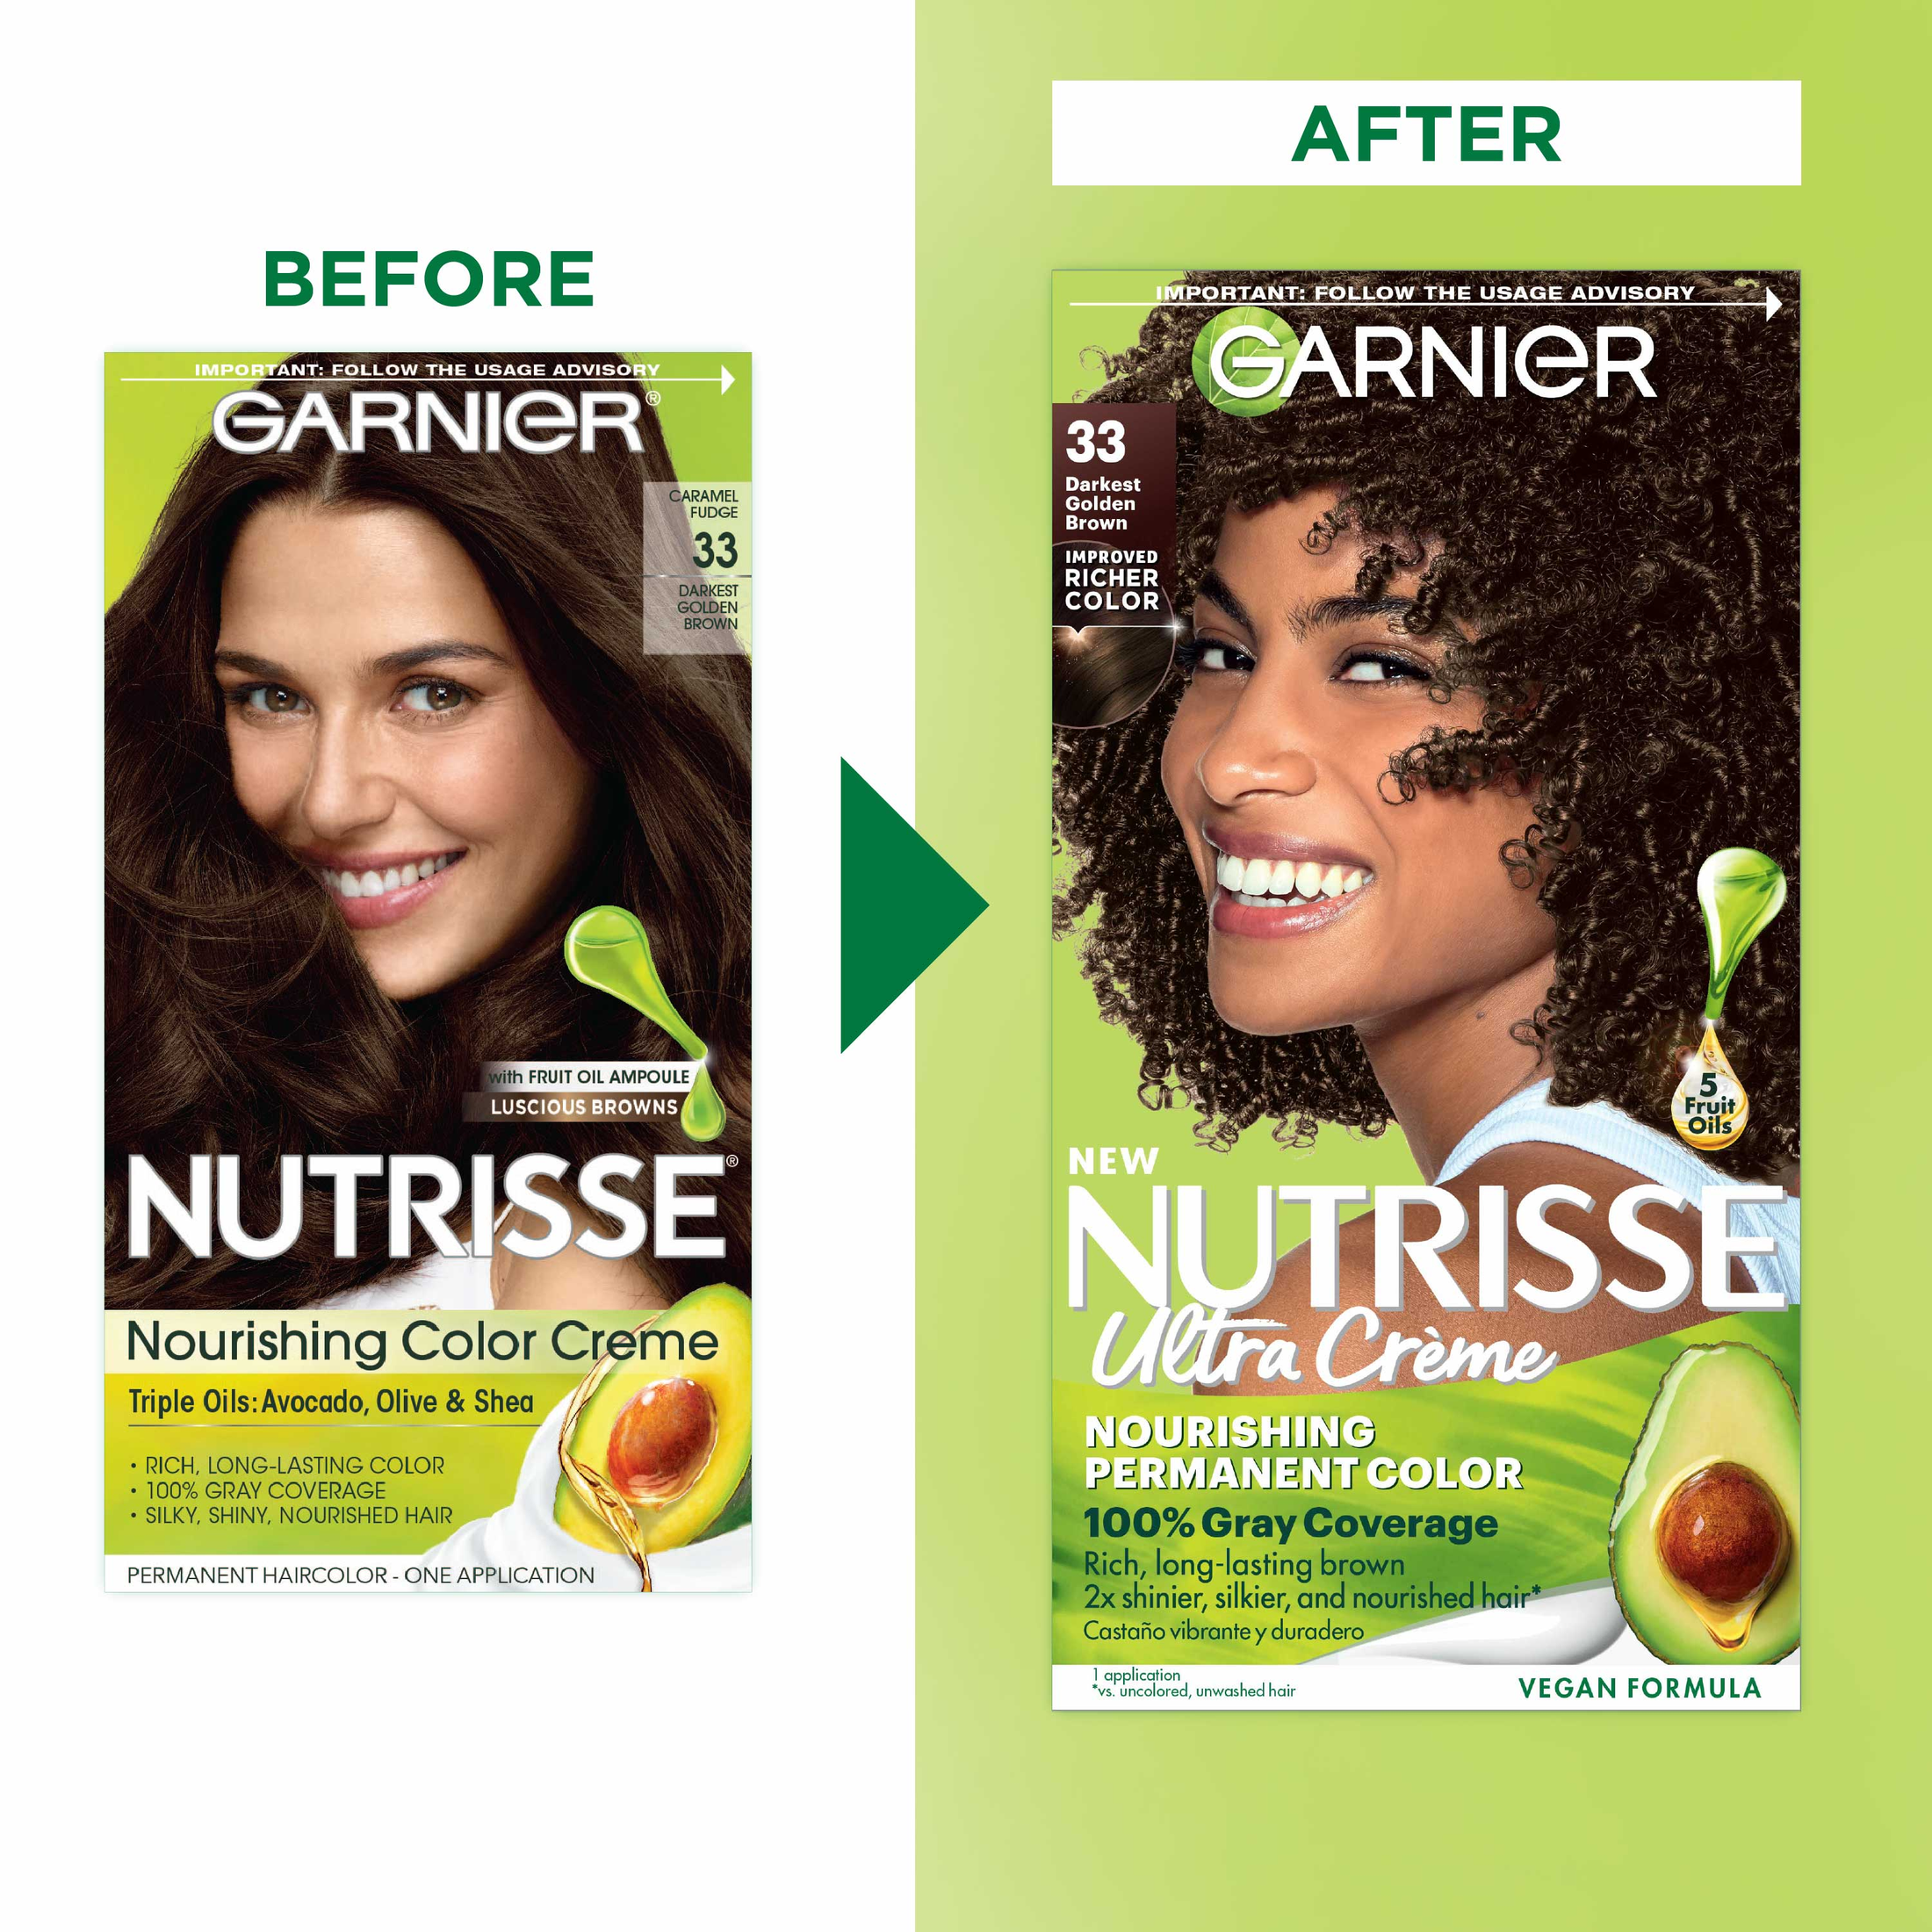 Garnier Nutrisse Nourishing Hair Color Creme, 33 Darkest Golden Brown - image 3 of 11